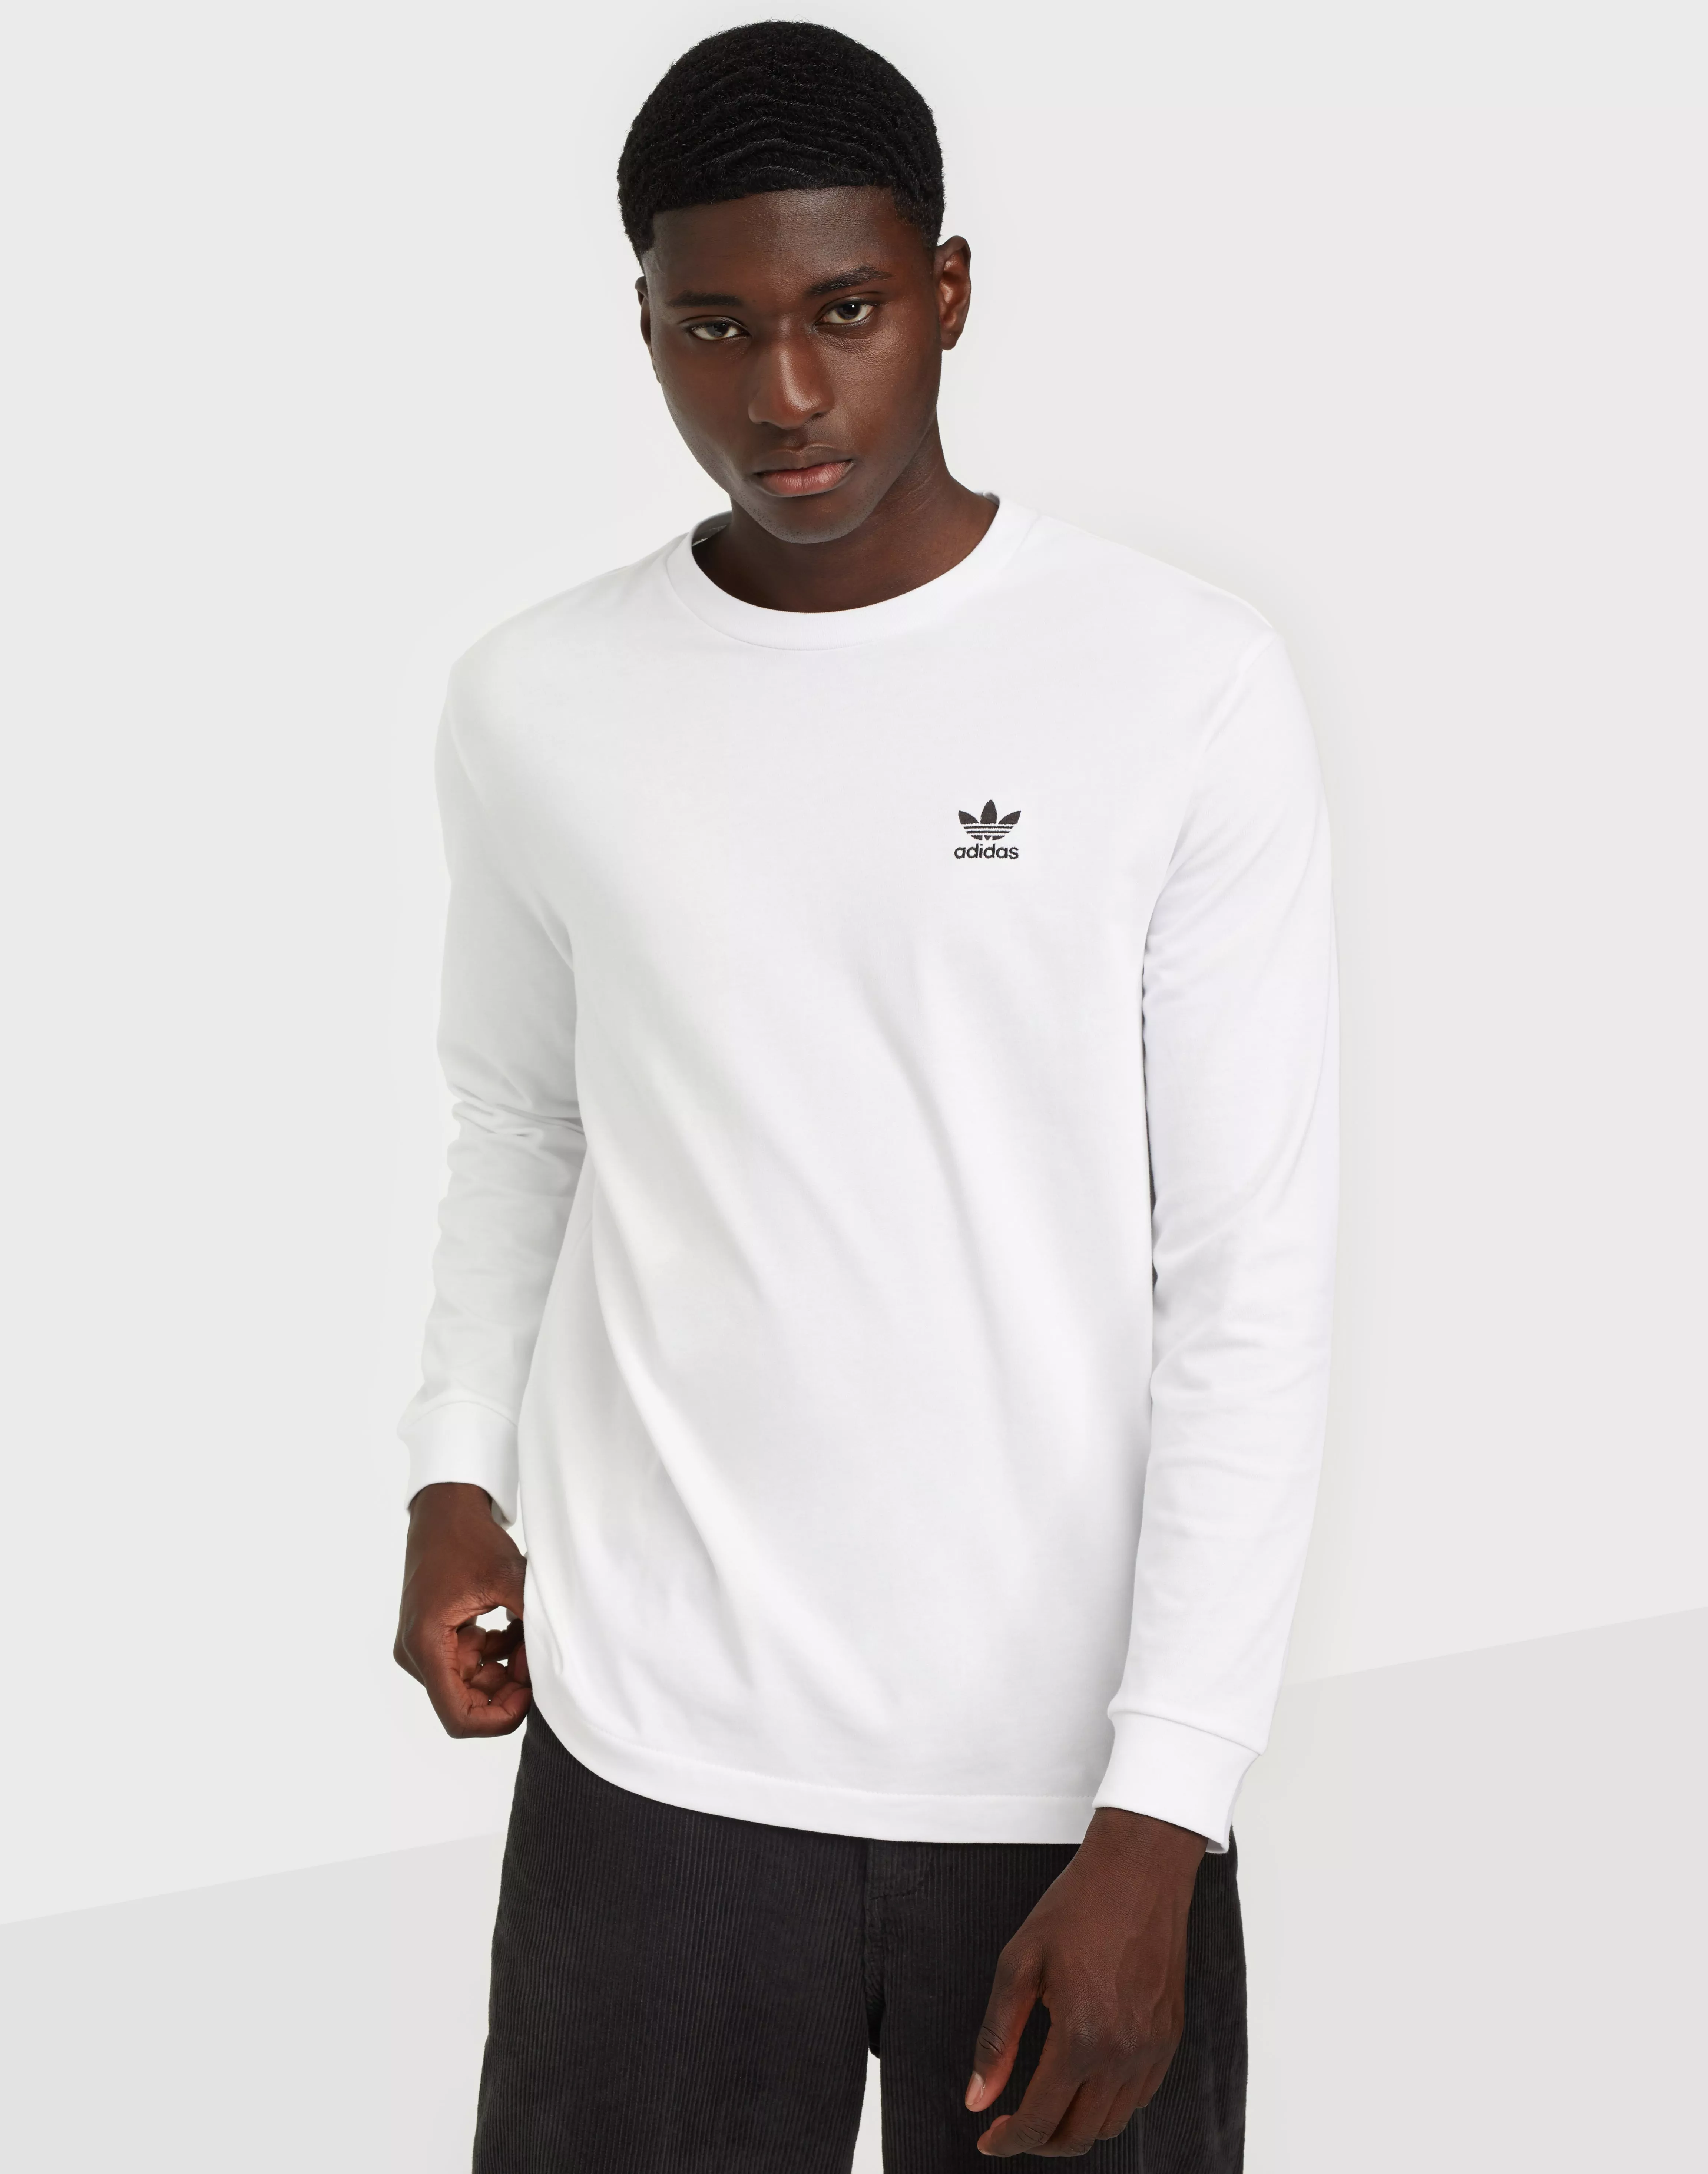 Buy Adidas Originals B+F TRFL LS NLY Man TEE White/Black - 